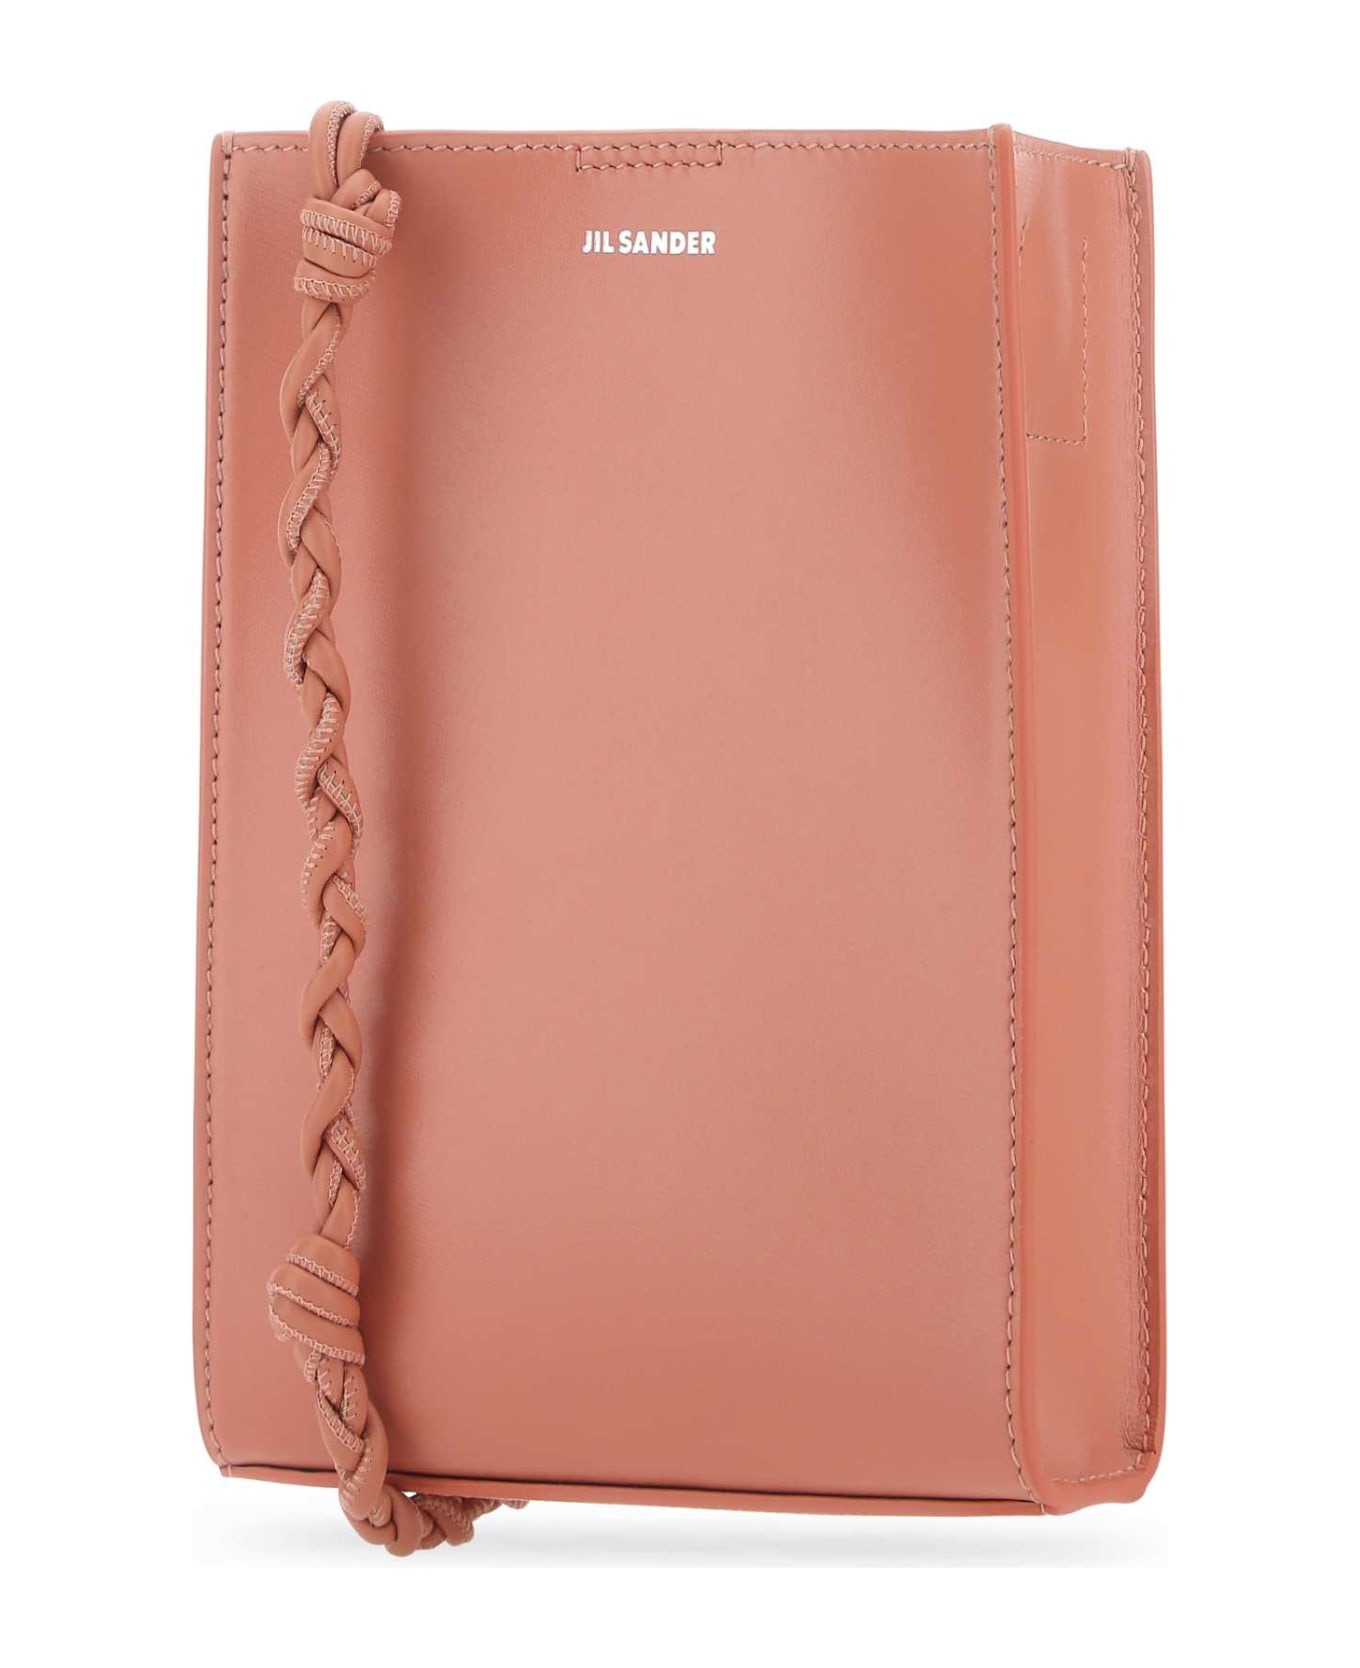 Jil Sander Pink Leather Small Tangle Shoulder Bag - 657 ショルダーバッグ